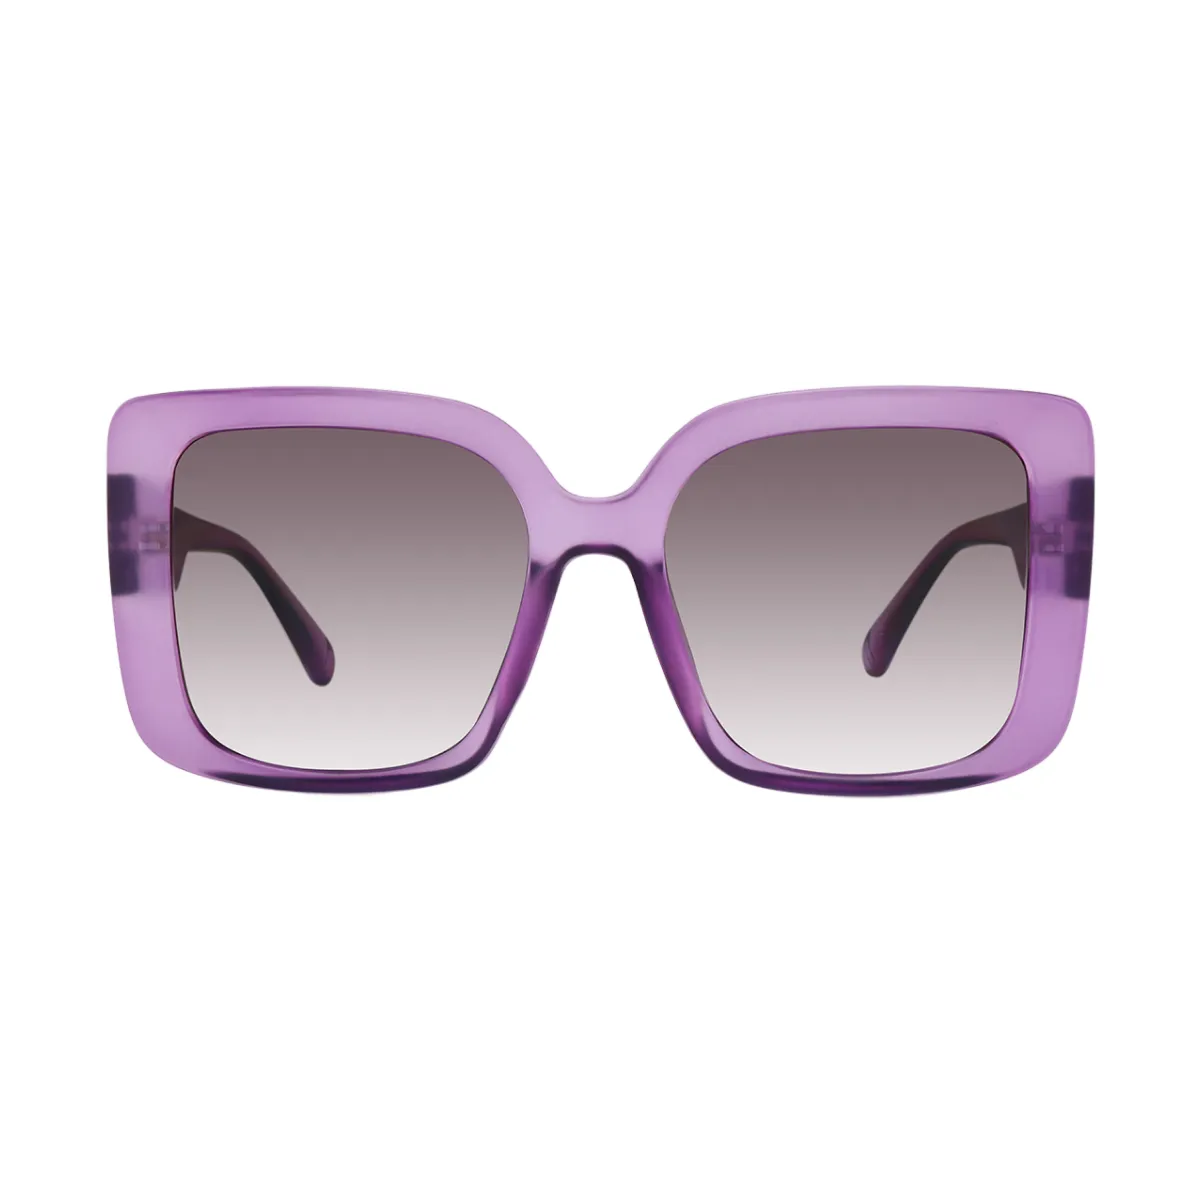 Aspasia - Square Frosted-Purple-Transpartent Sunglasses for Women